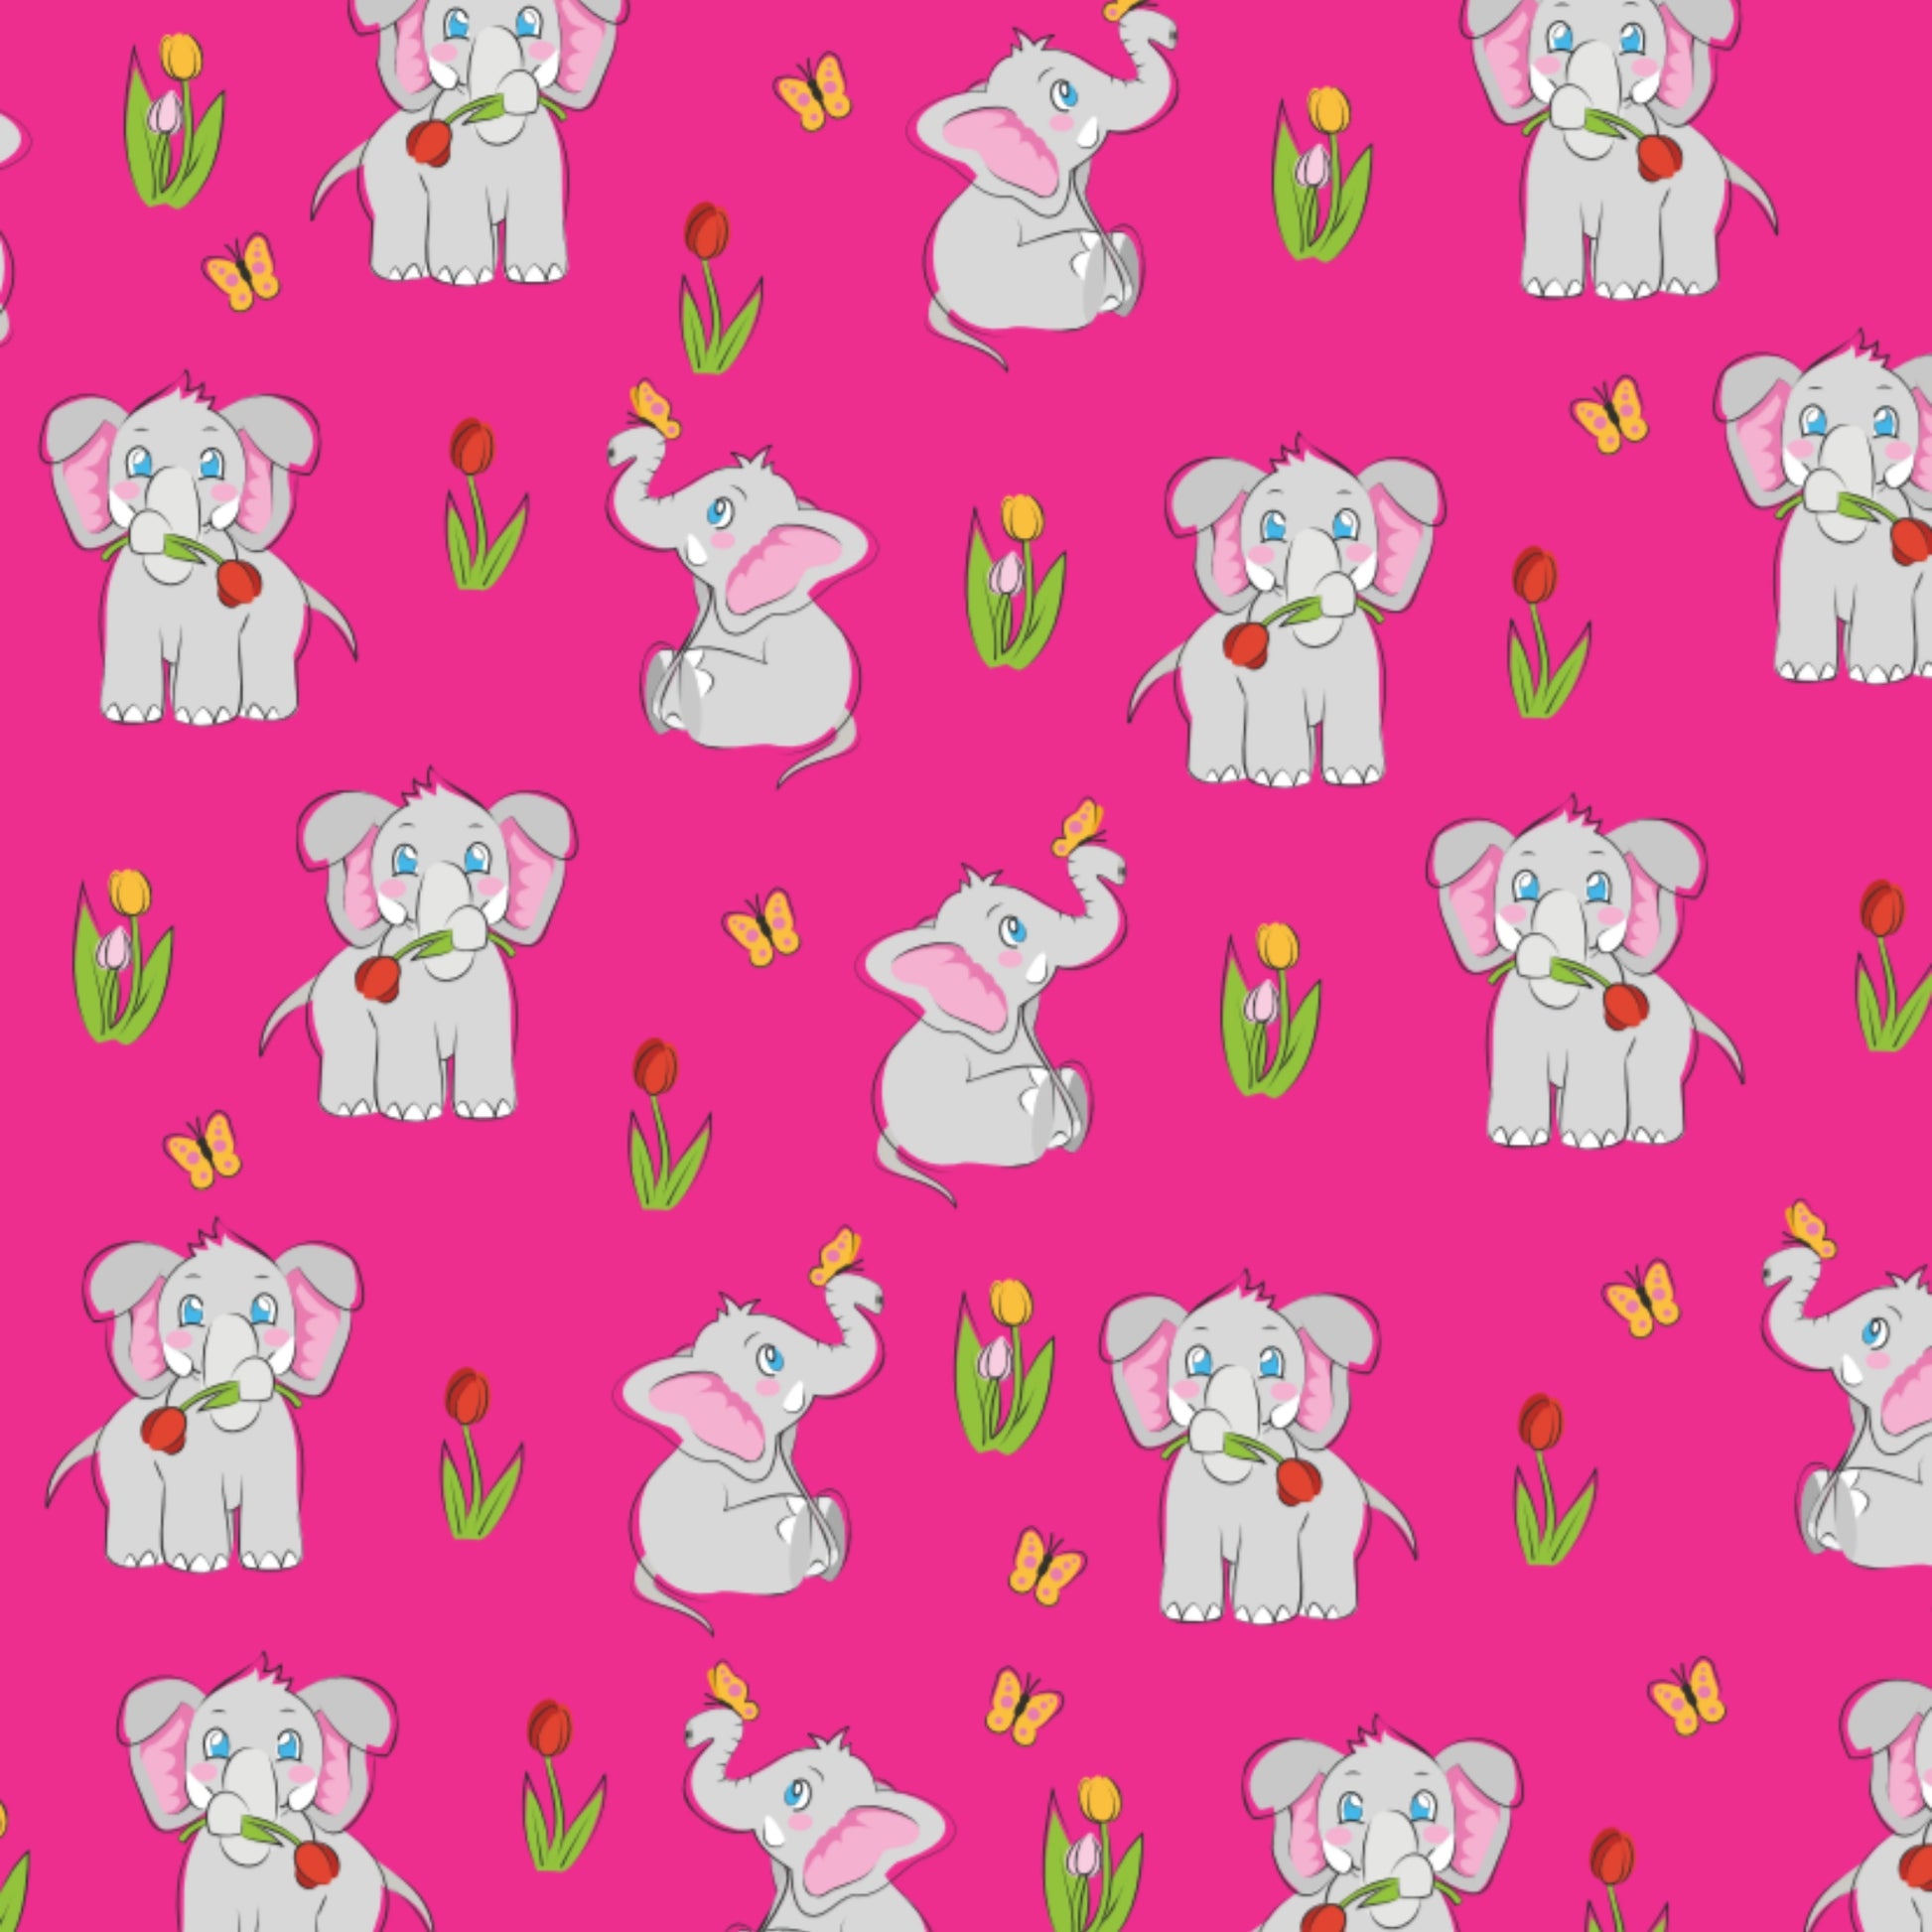 Parade-Elephant-Tulips-Kitsch-Vintage-Inspired-Animal-Print-Cute-Hot-Pink-RainbowsAndFairies.com.au-PARAD_ORG-01